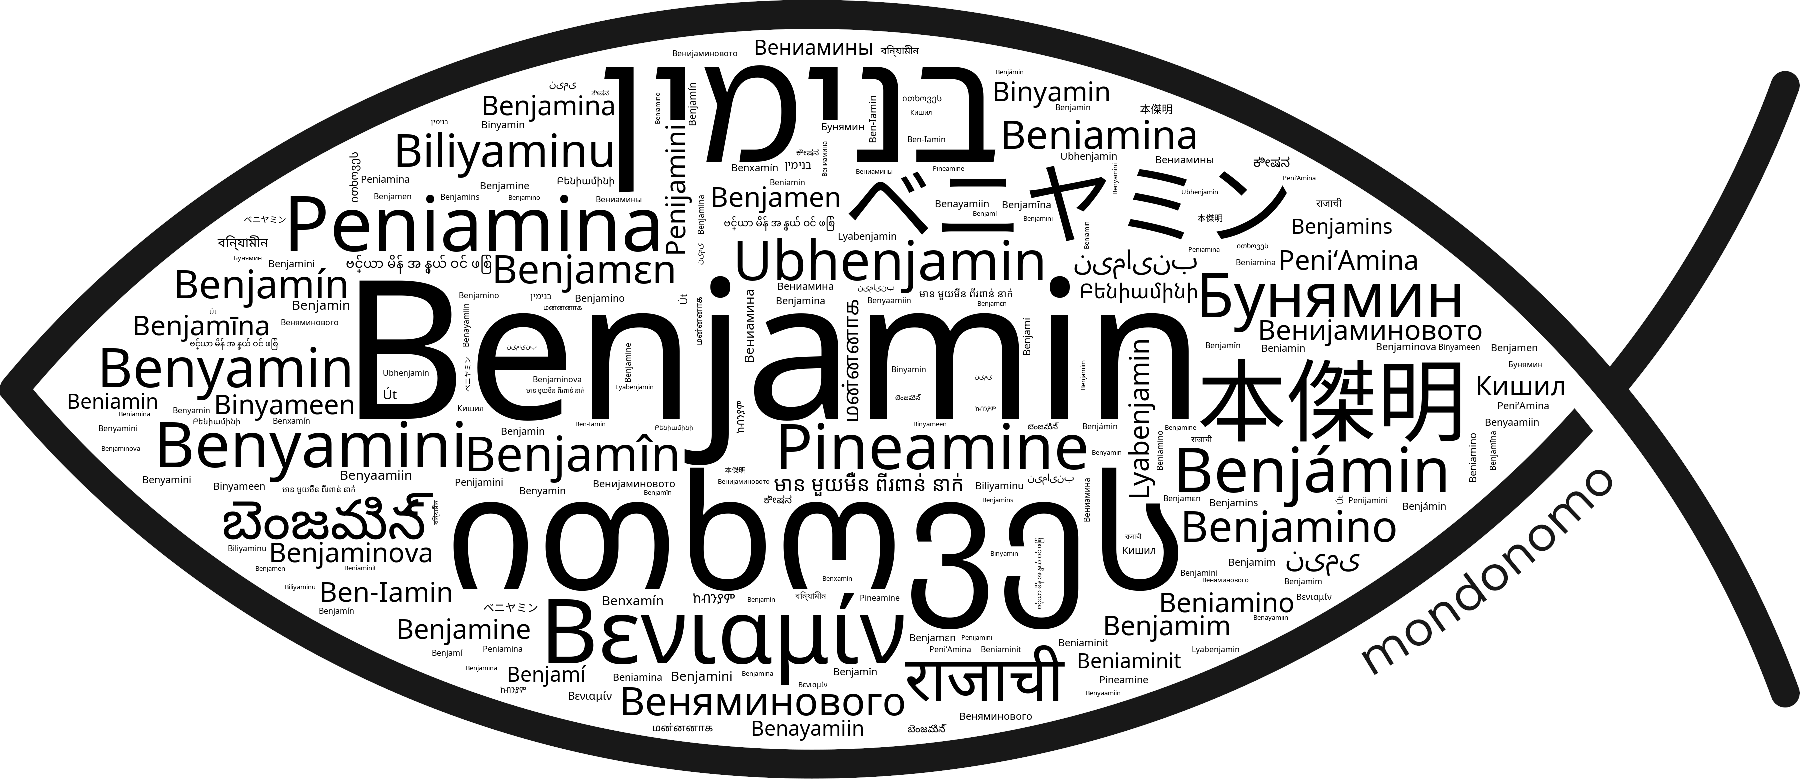 Name Benjamin in the world's Bibles